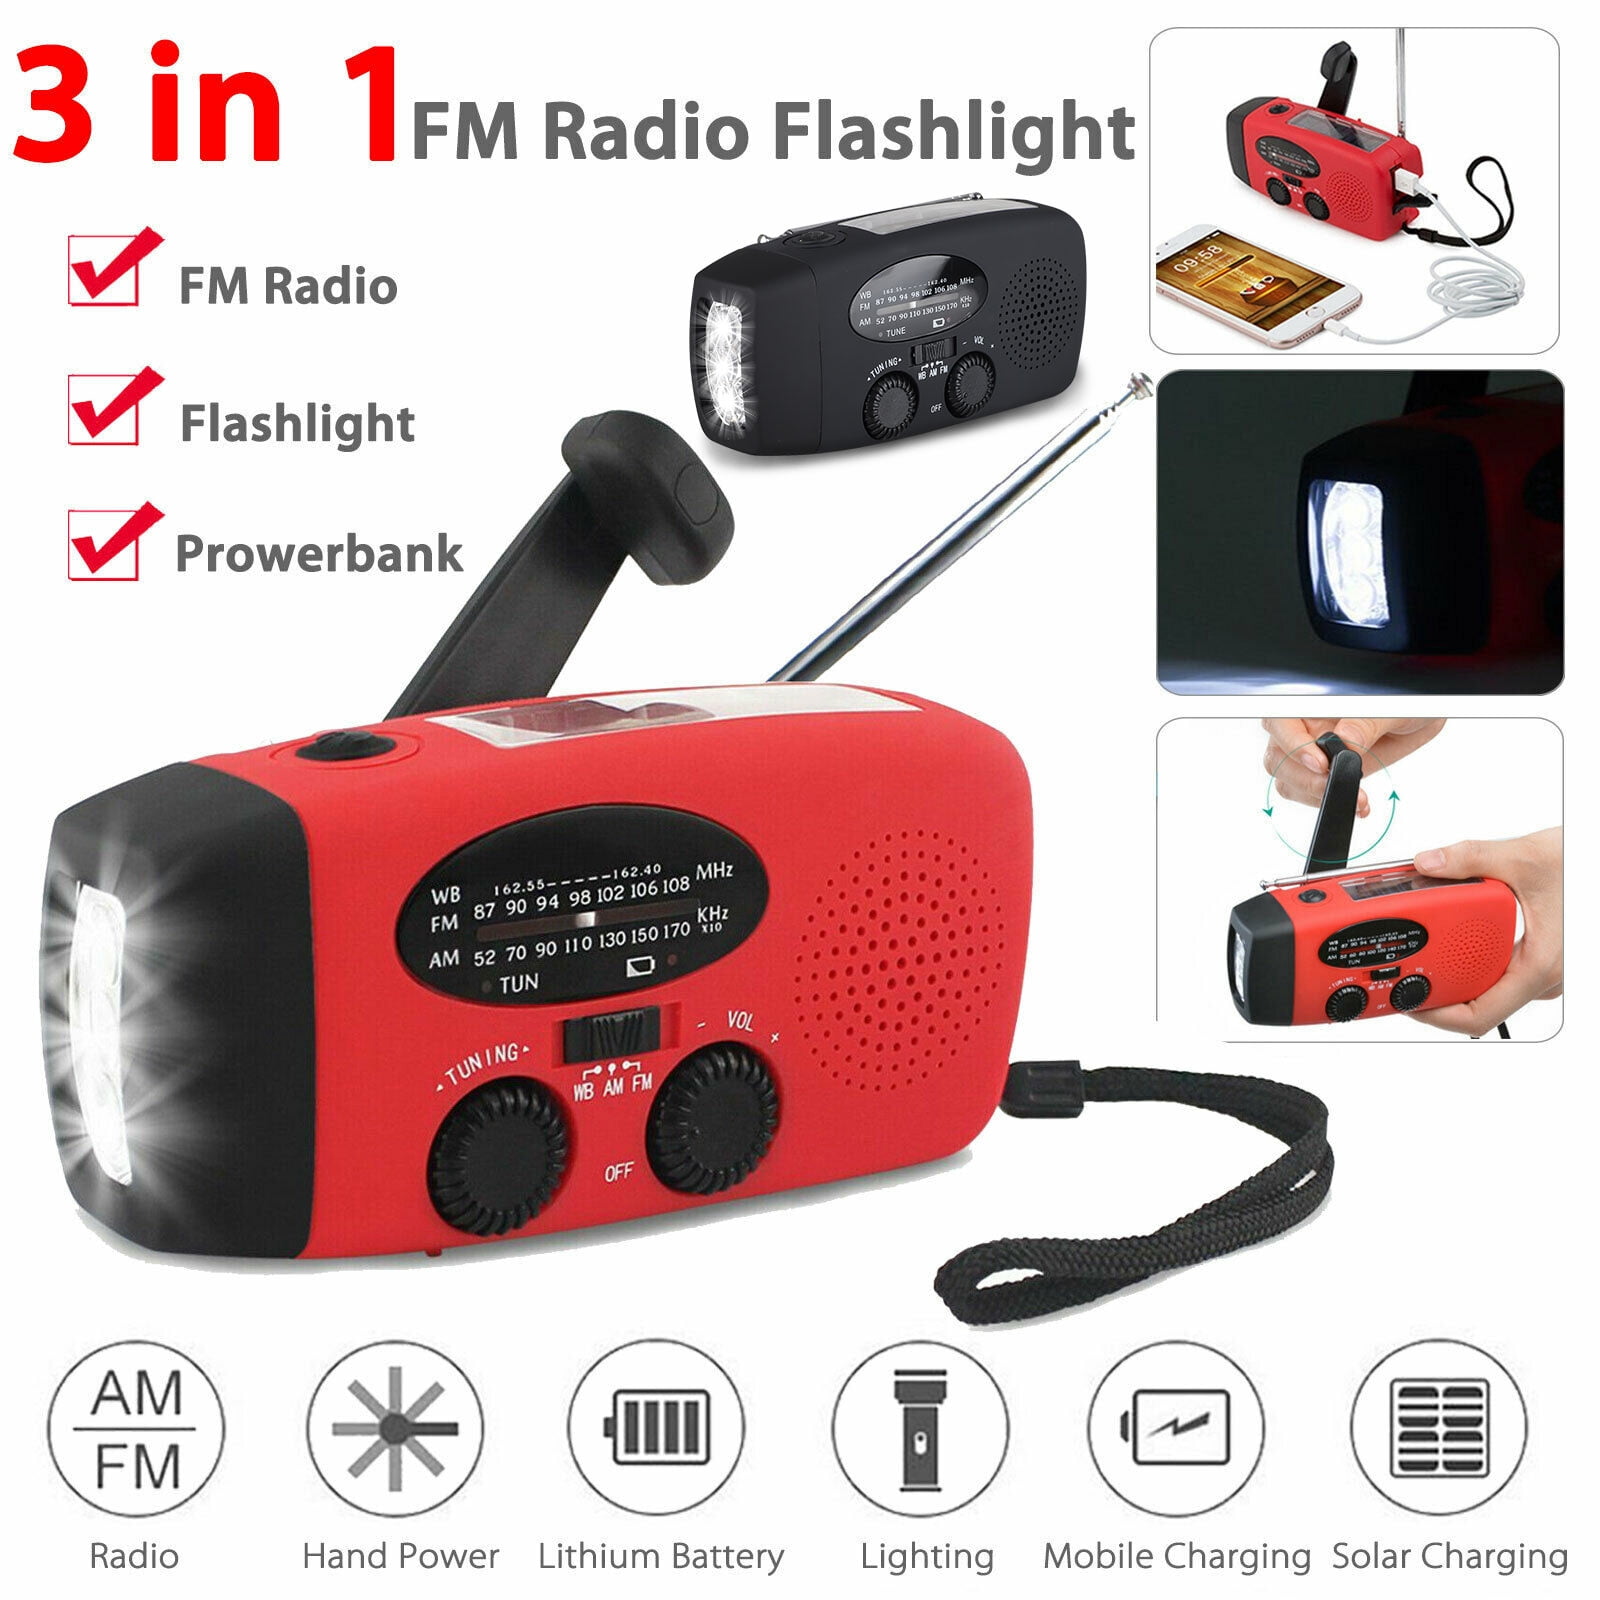 Upgraded Version Red Dynamo LED Flashlight Power Bank for iPhone/Android Smart Phone 1000mAh Solar Hand Crank Radio AM/FM/NOAA/WB Weather Emergency Radio iRonsnow IS-088+ 